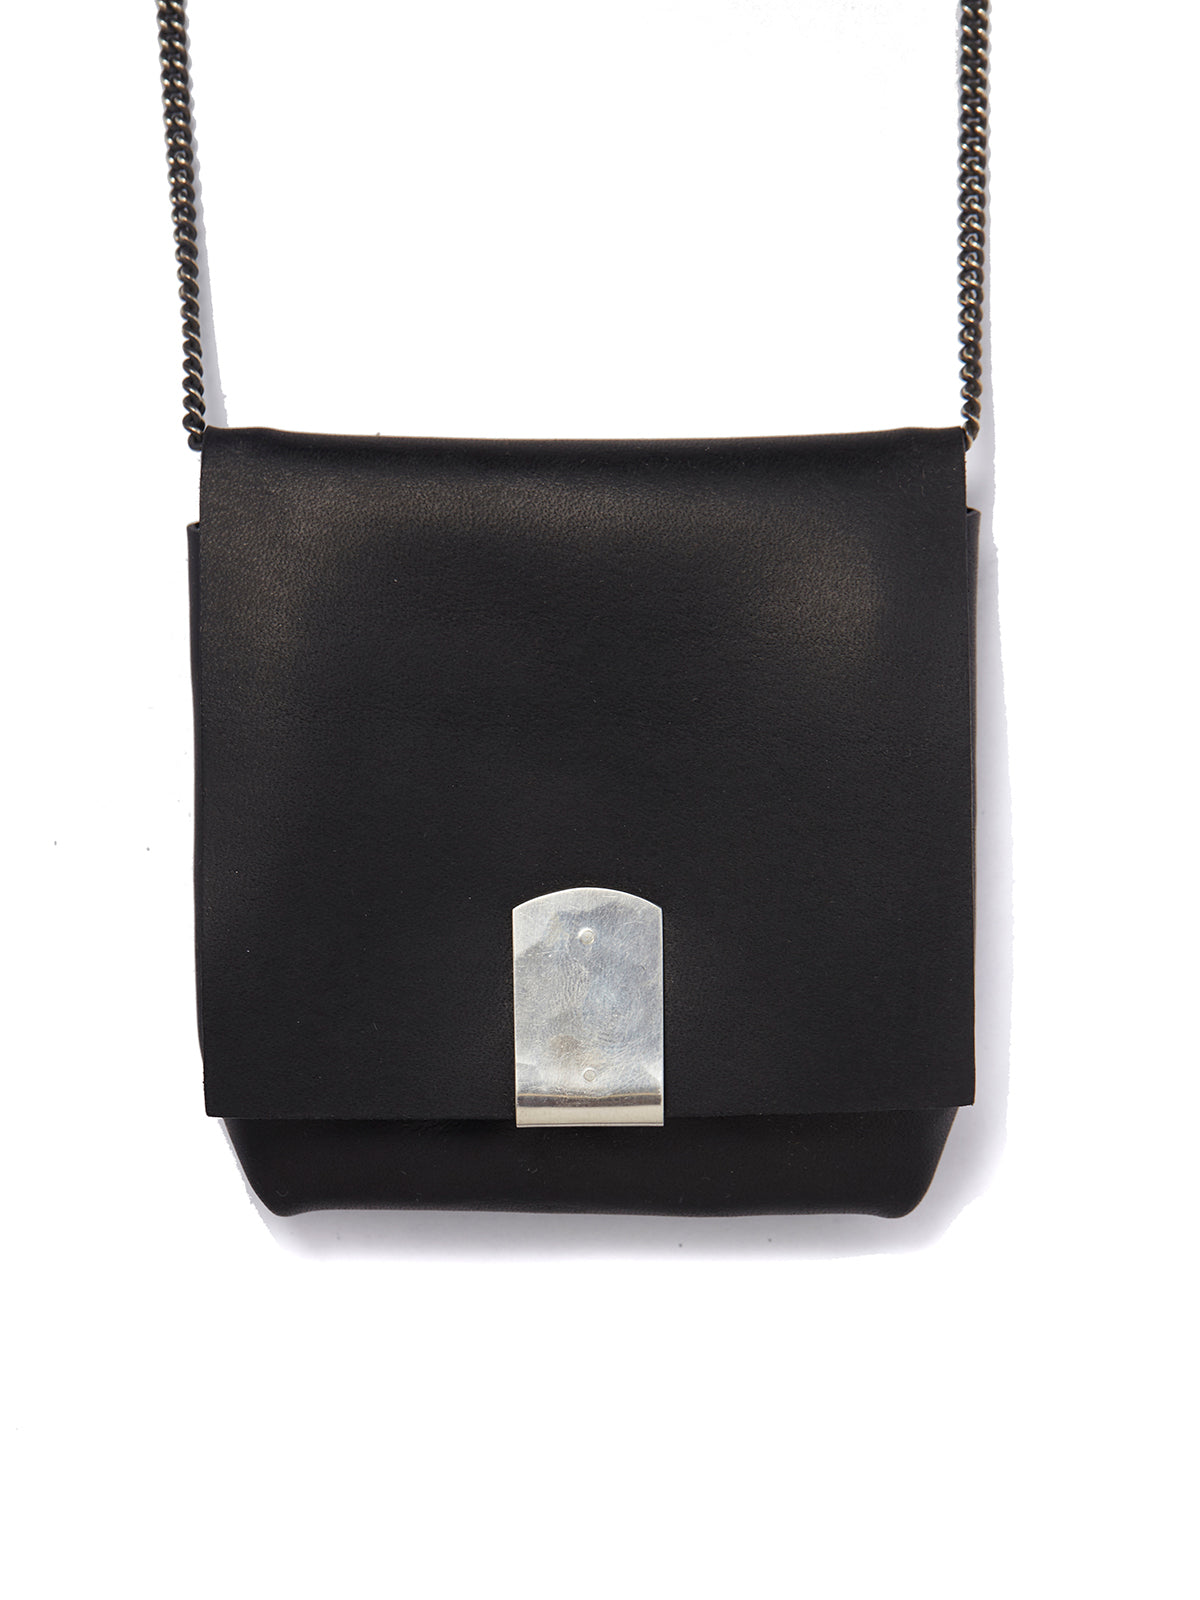 Men's Black Leather Mini Neck Handbag with Silver Chain and Closure